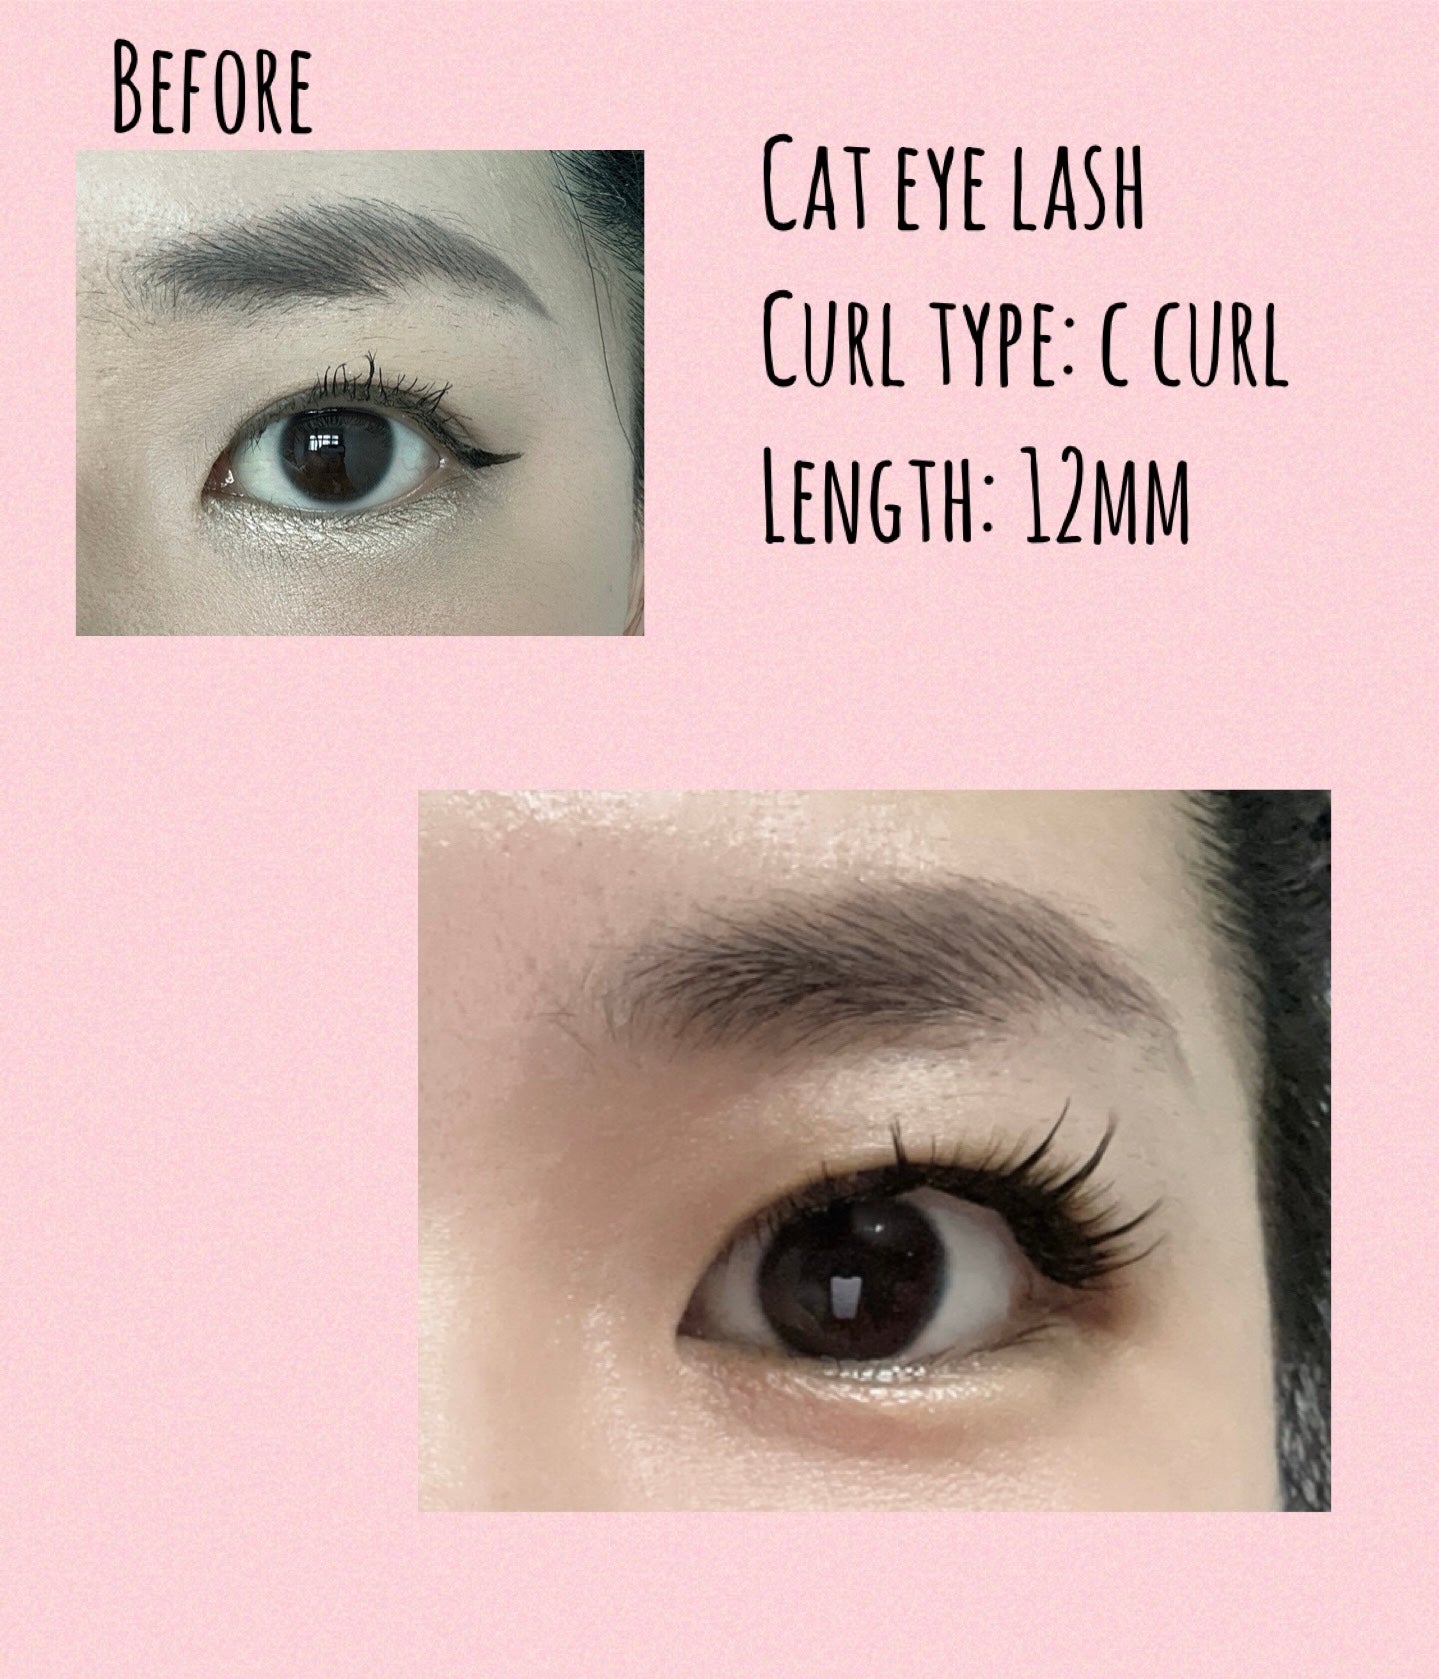 Cat eye lash (6 pairs of self adhesive lashes)